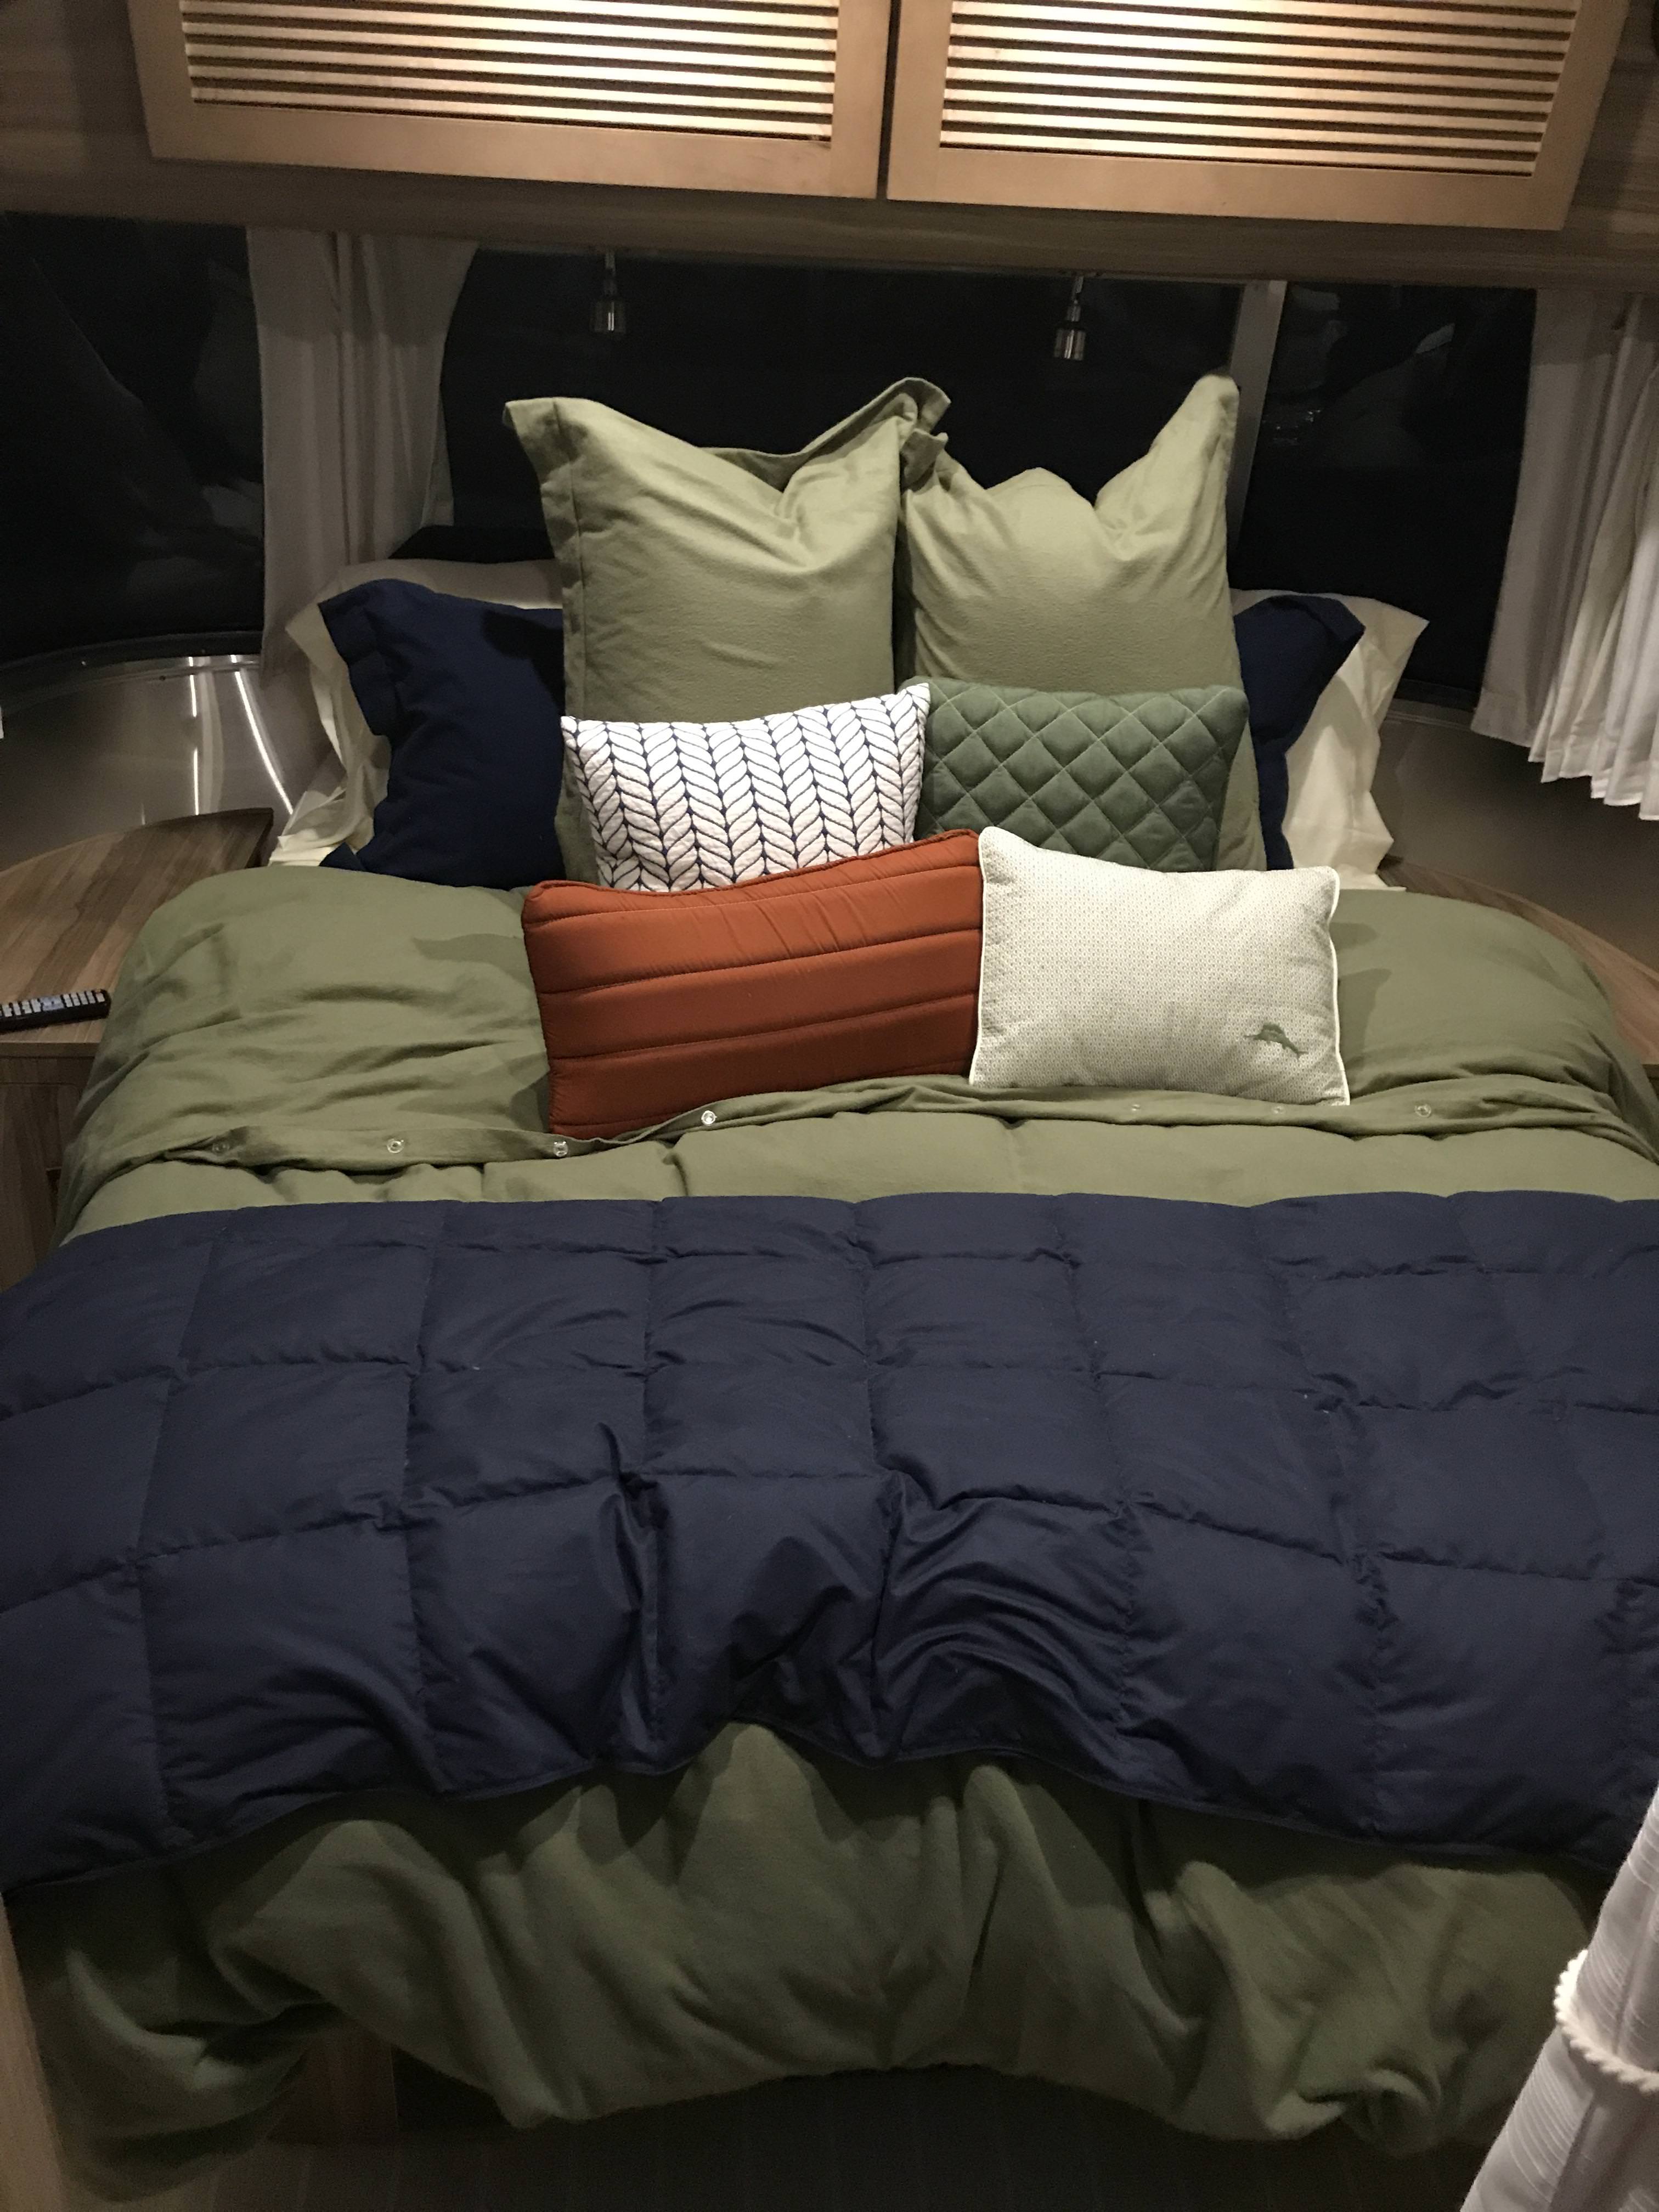 Make your bed more comfy. Photo via Air Forums